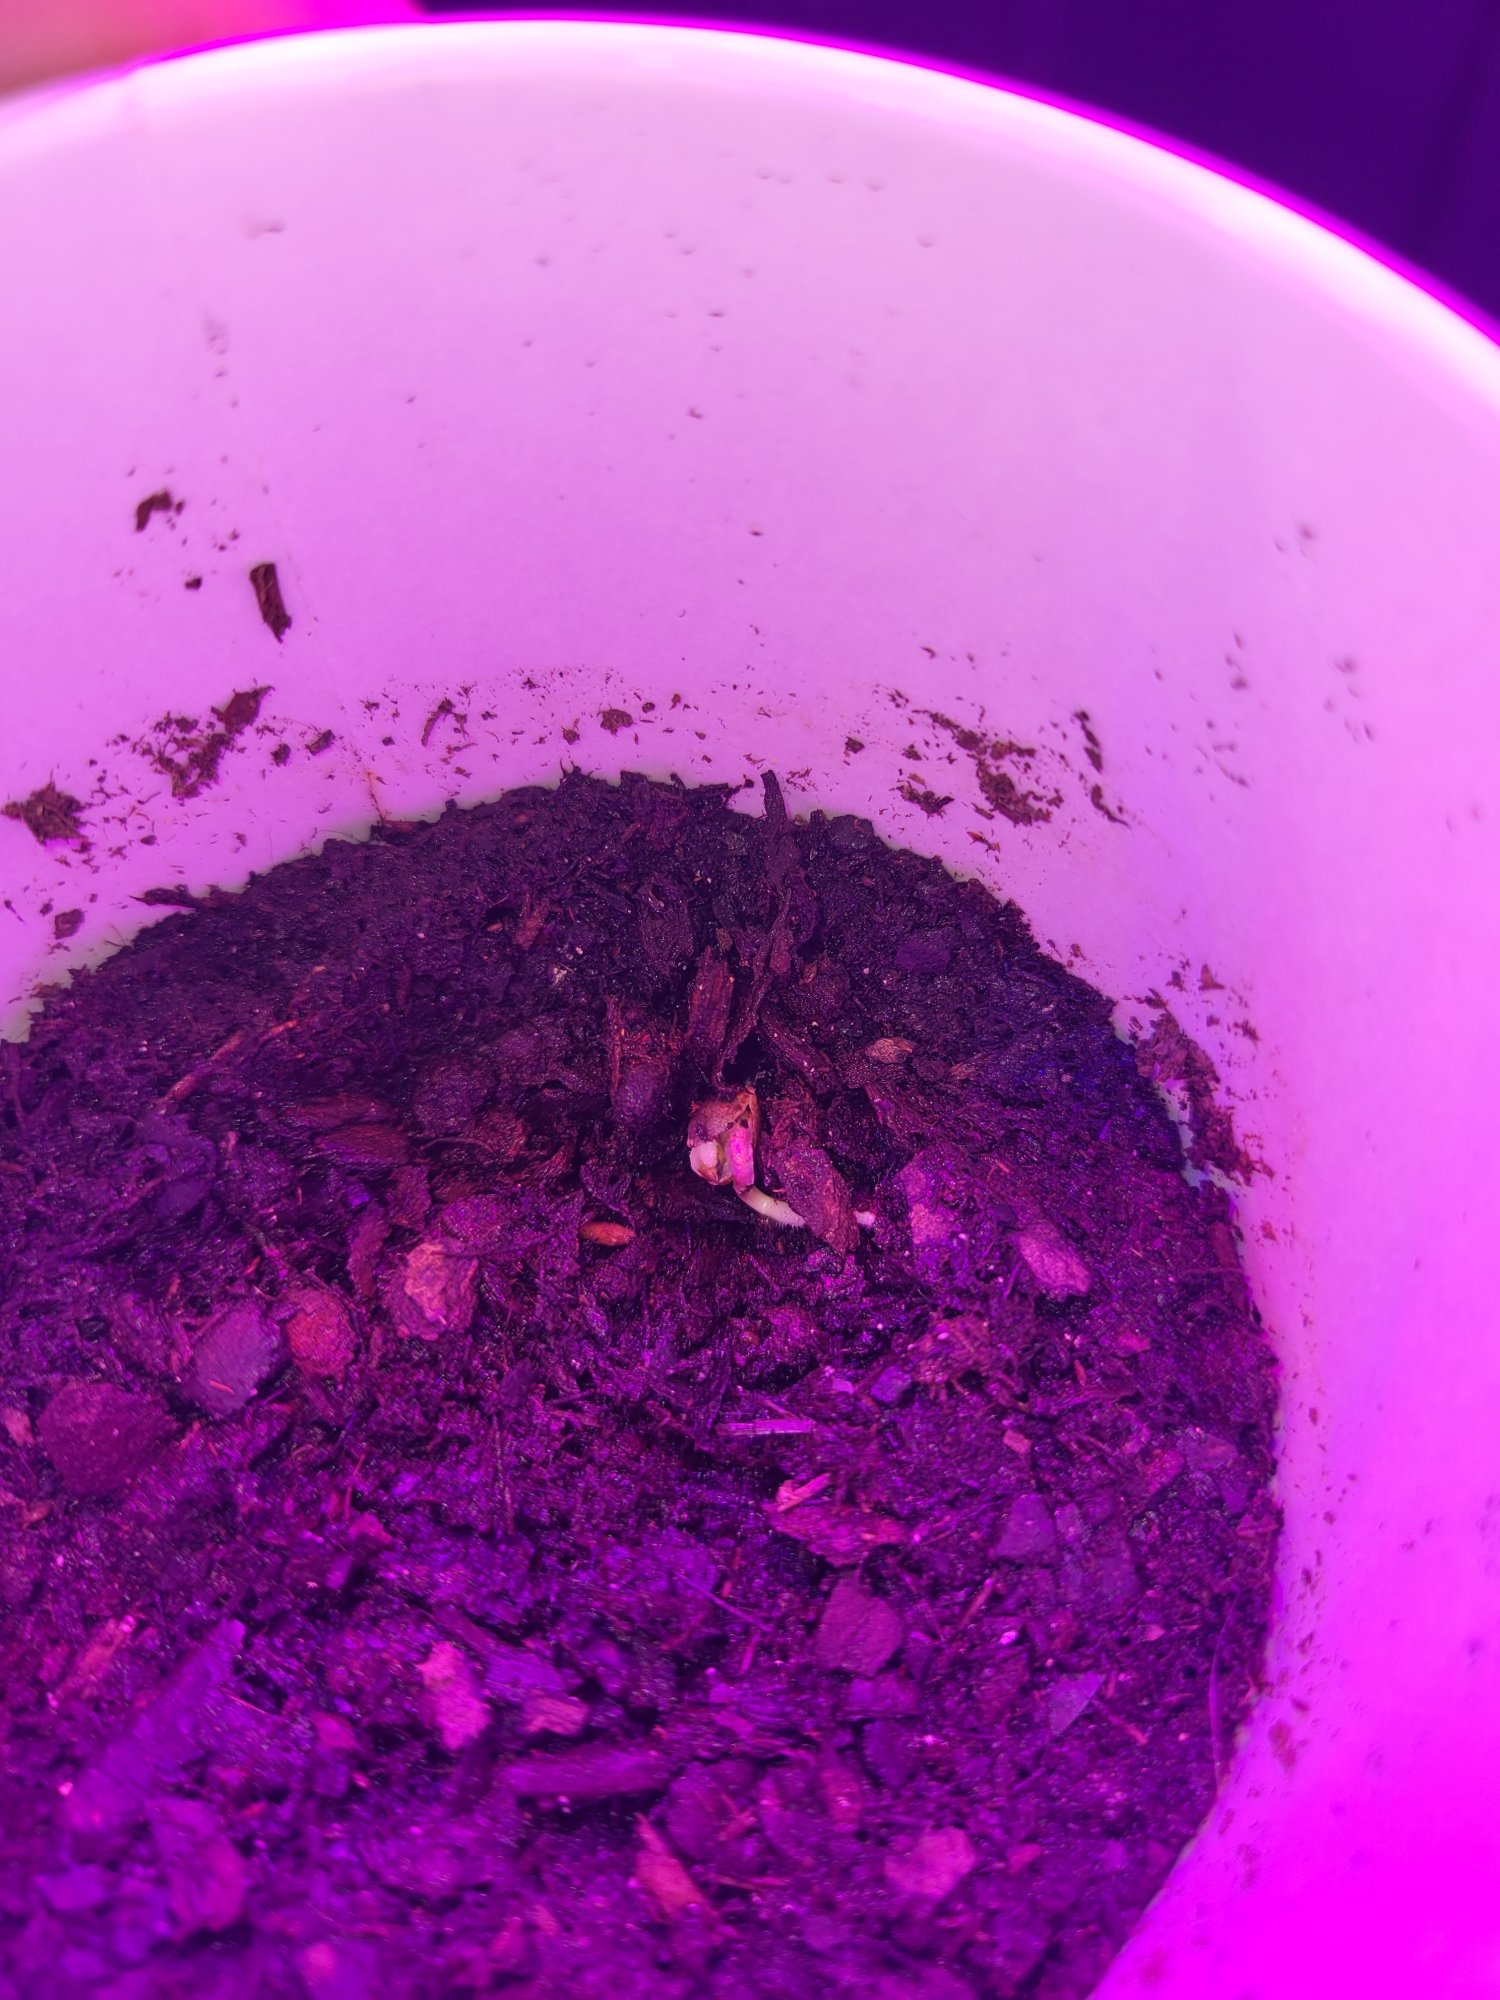 Is my seedling growing fine